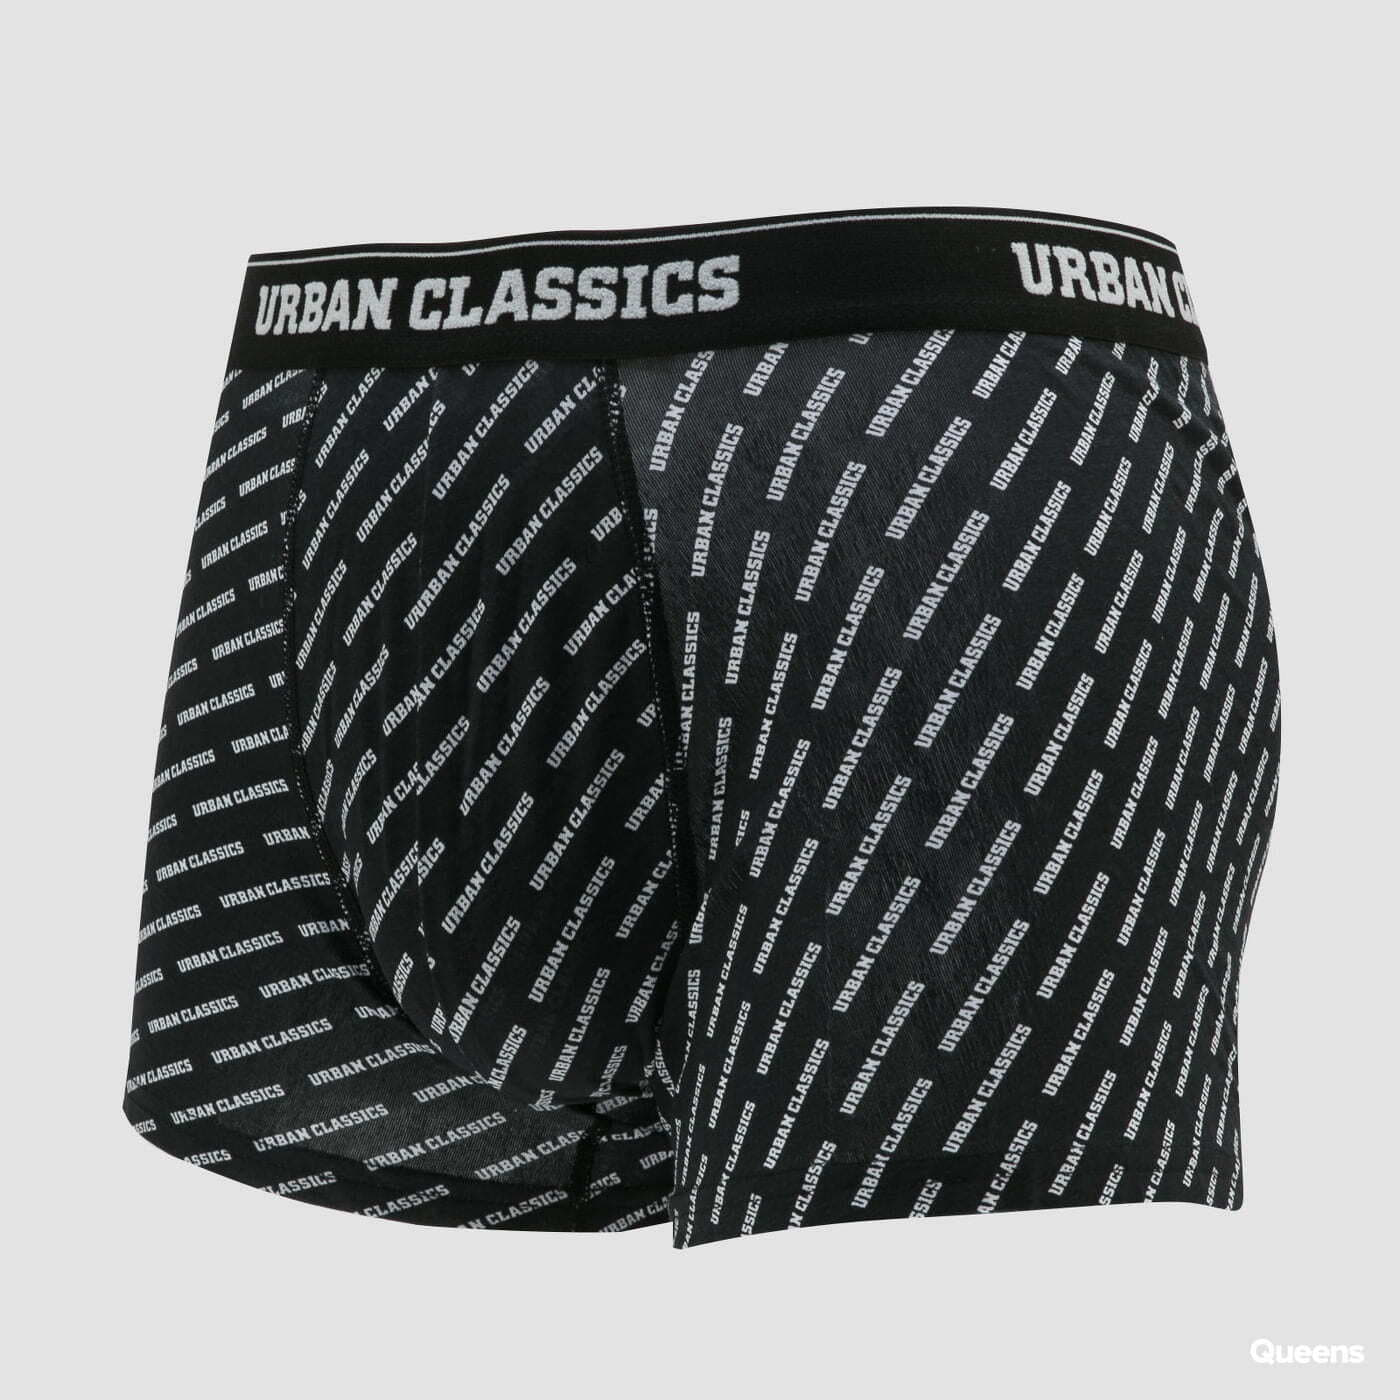 2-Pack Camo Boxer Shorts, Urban Classics Boxers Set